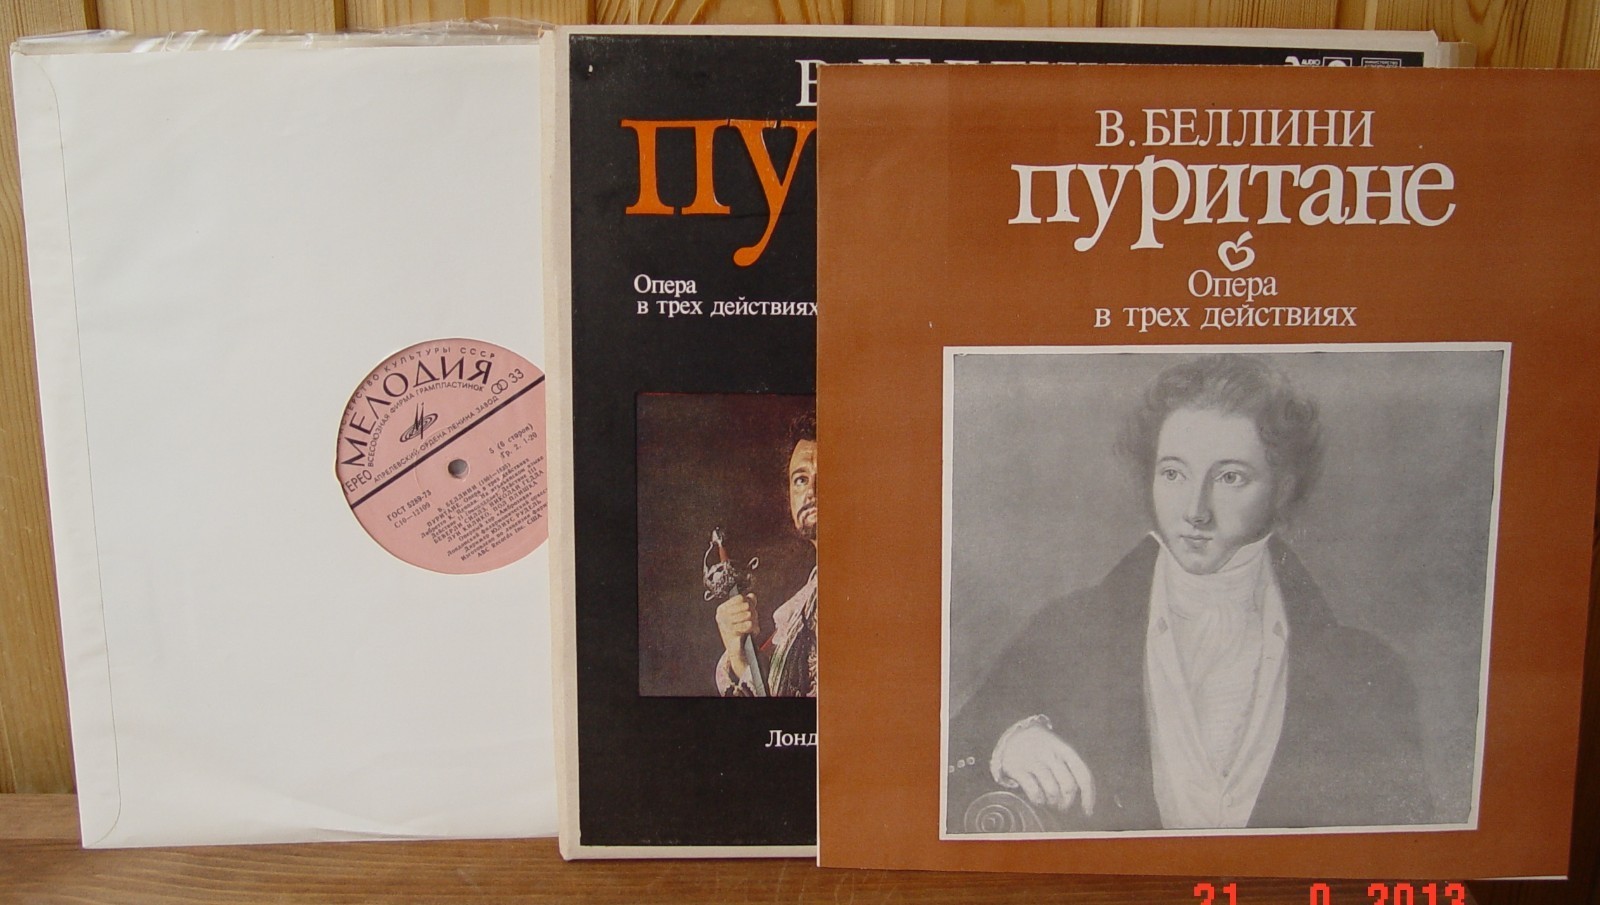 В. БЕЛЛИНИ (1801—1835): «Пуритане», опера в трех действиях (на итальянском яз.)